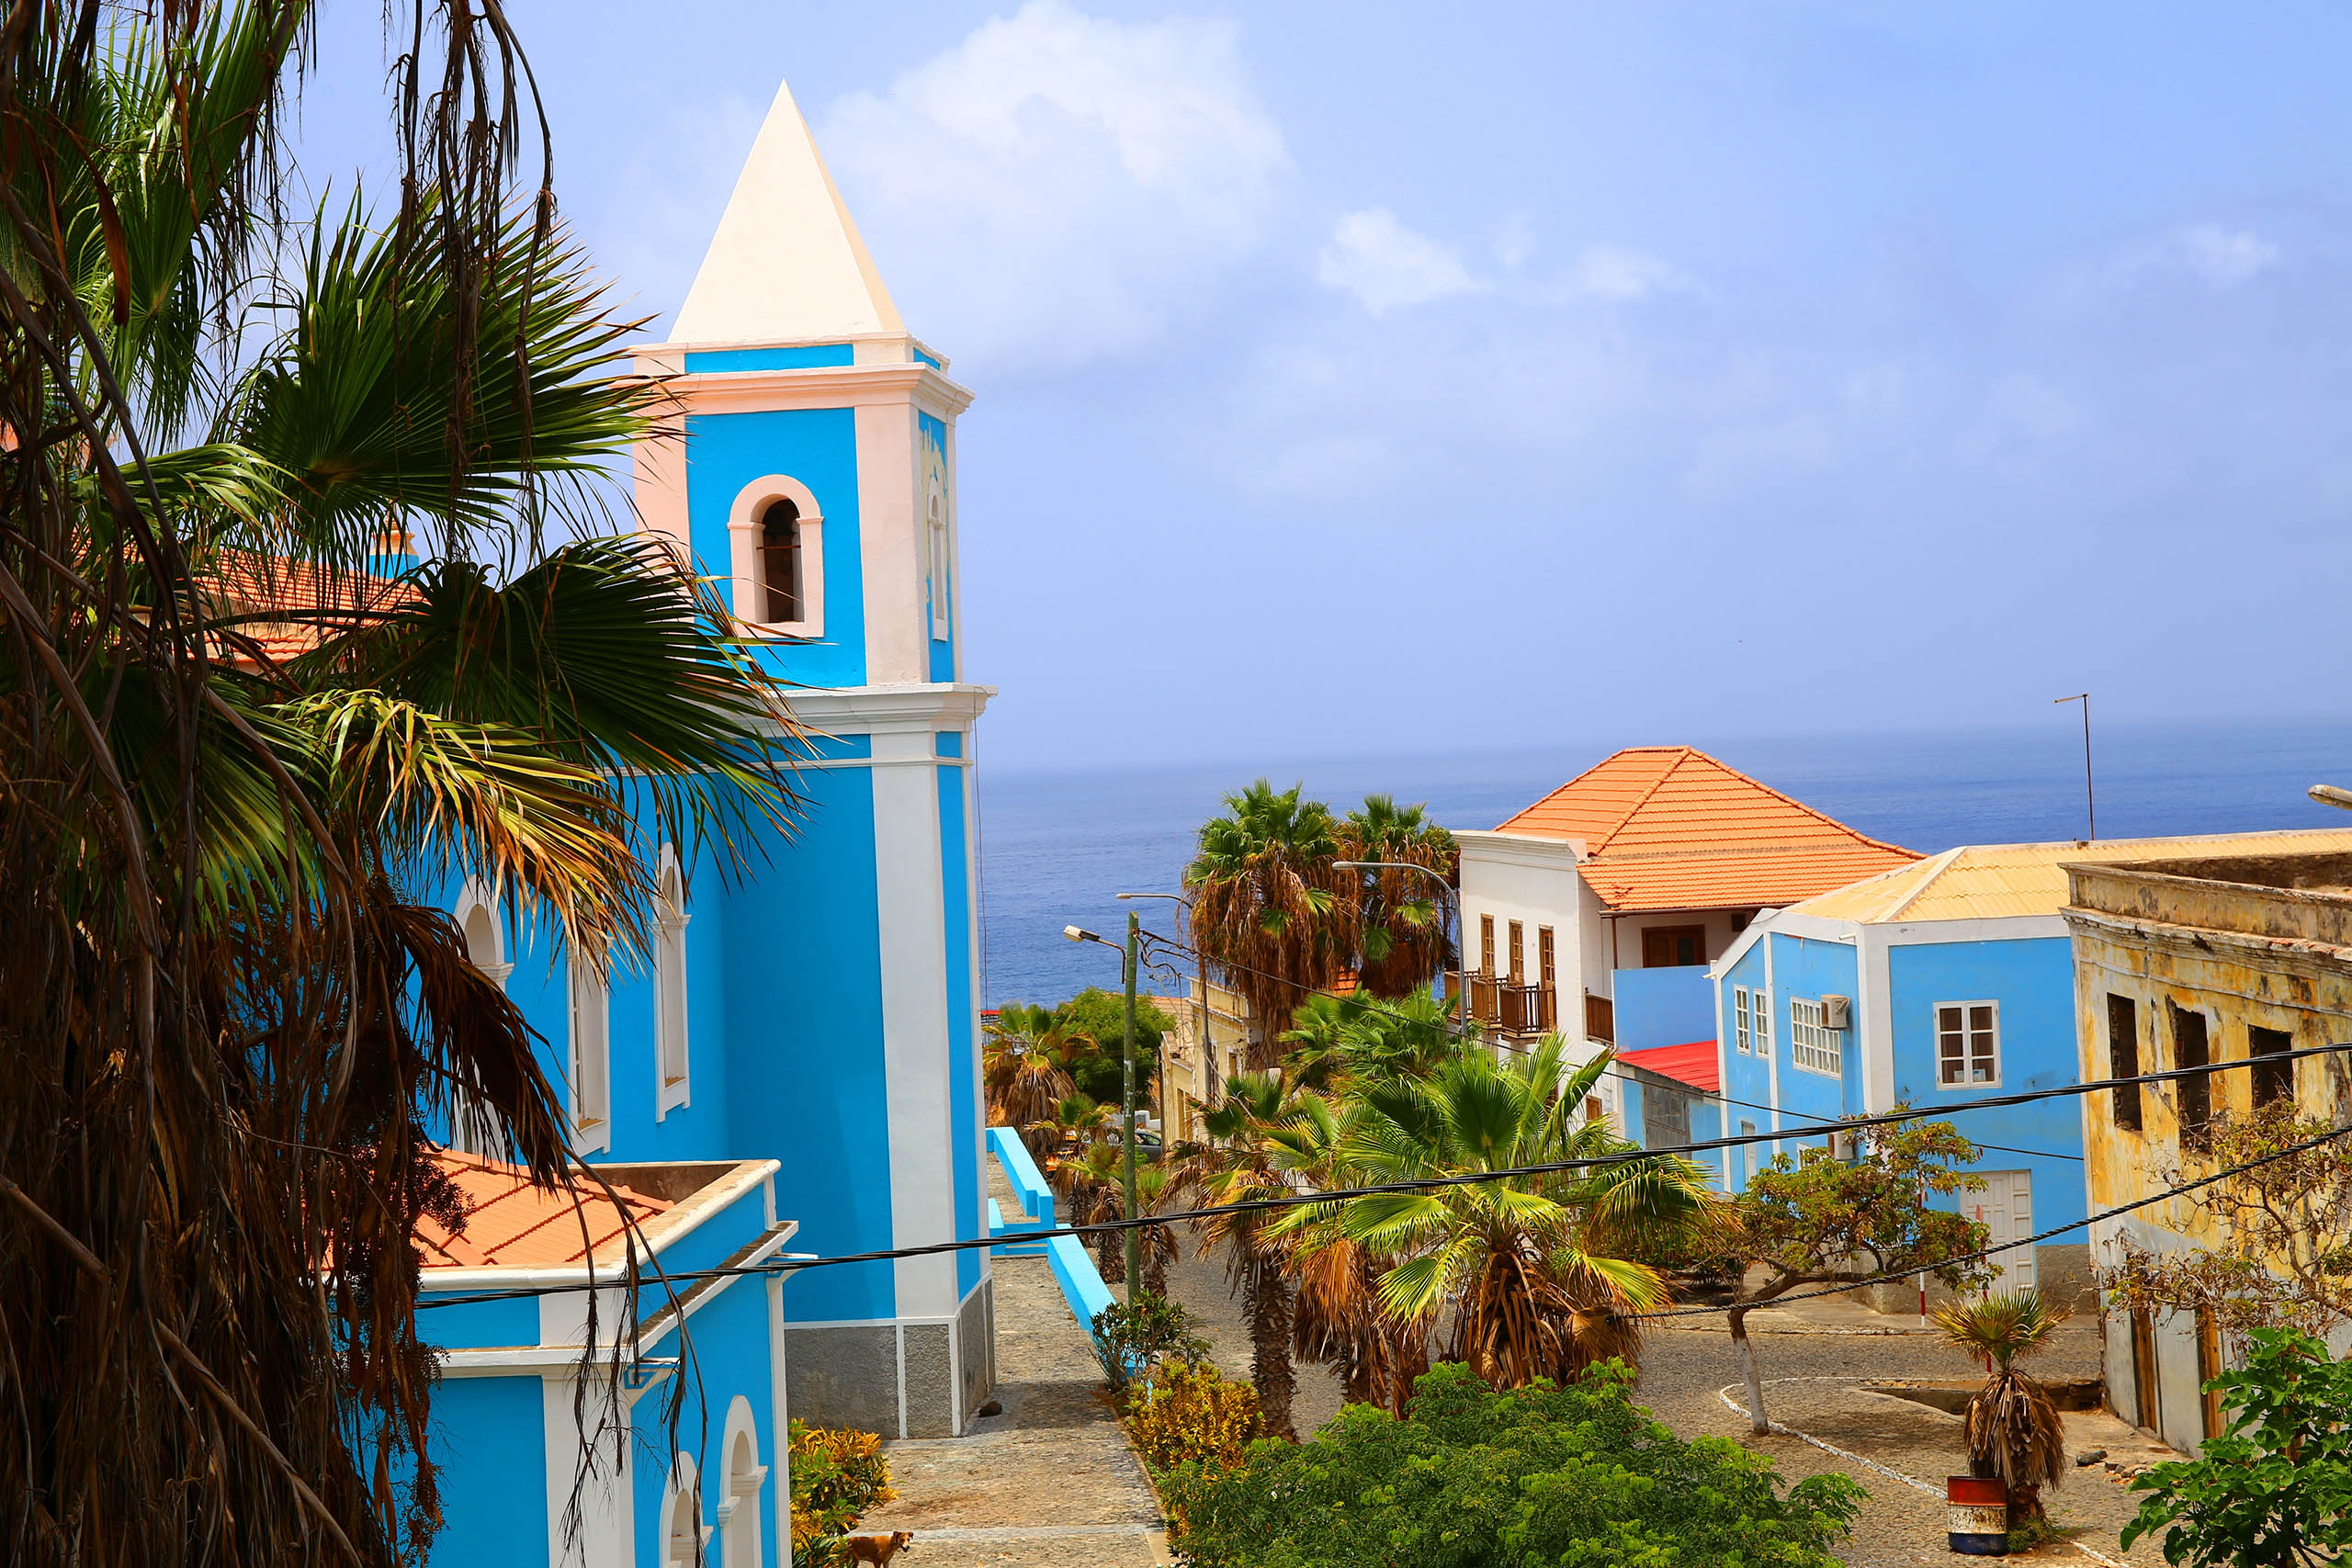 Beautiful colorful church on a remote island of Fogo, Sao Felipe, Cape Verde, Africa